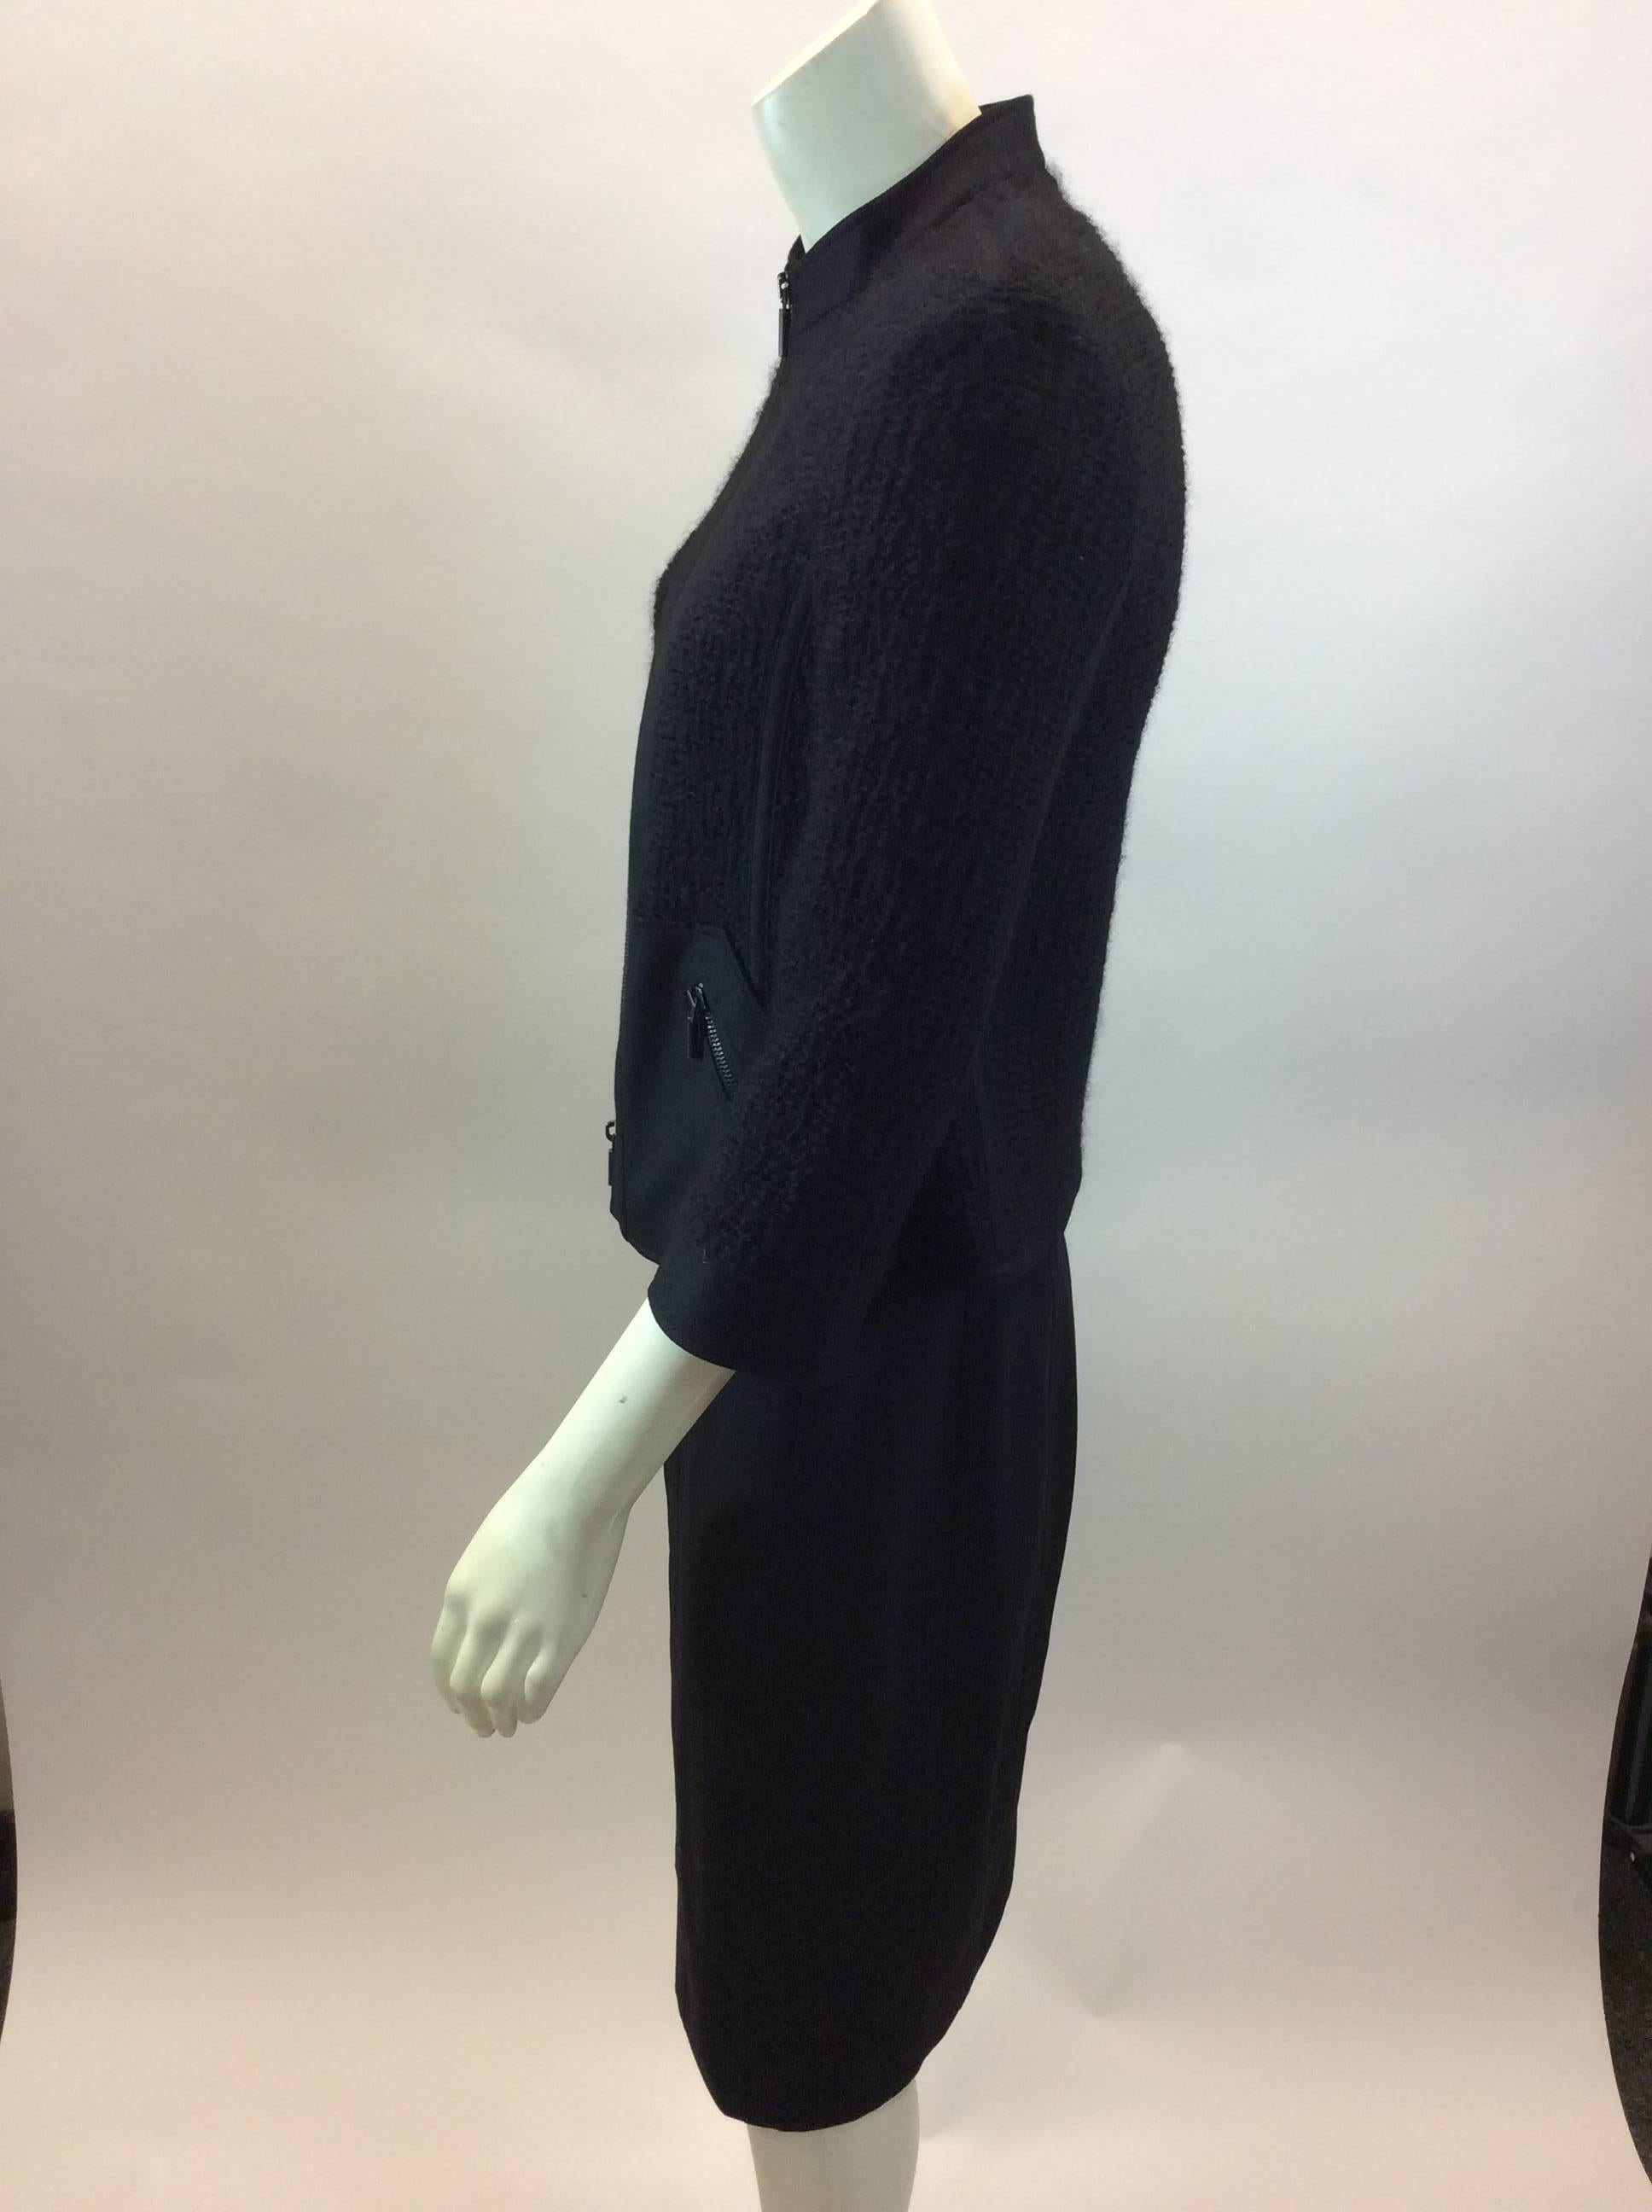 Akris Black Wool Two Piece Skirt Suit 
$199
Made in Switzerland
Skirt: Size 6
52% viscose, 46% Wool, 2% Nylon
Length 23